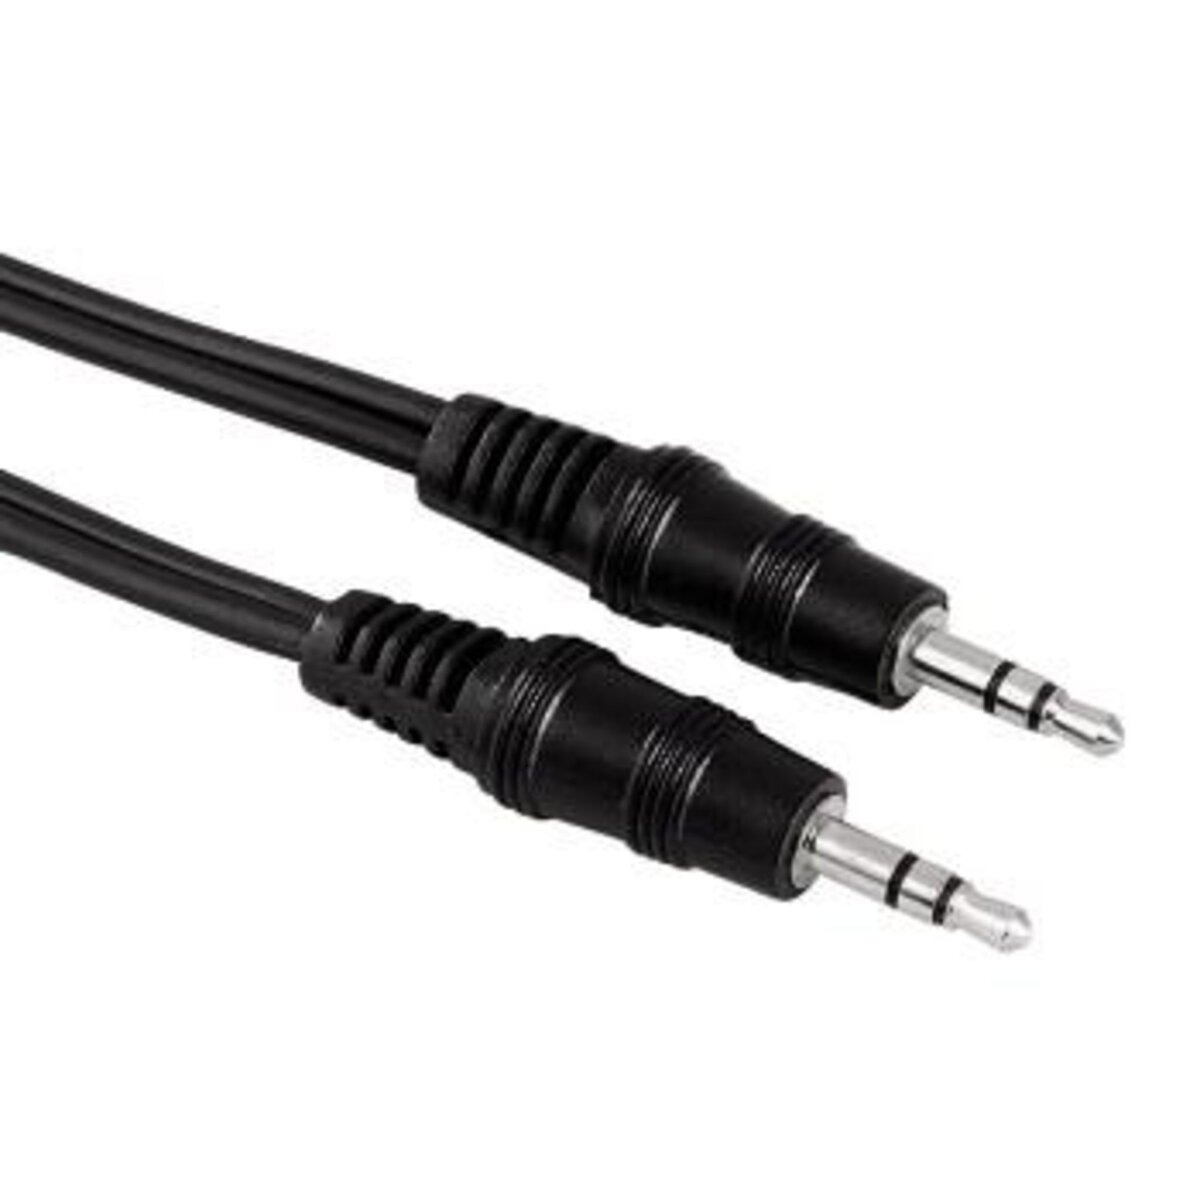 QILIVE Jack 3,5mm - Câble audio